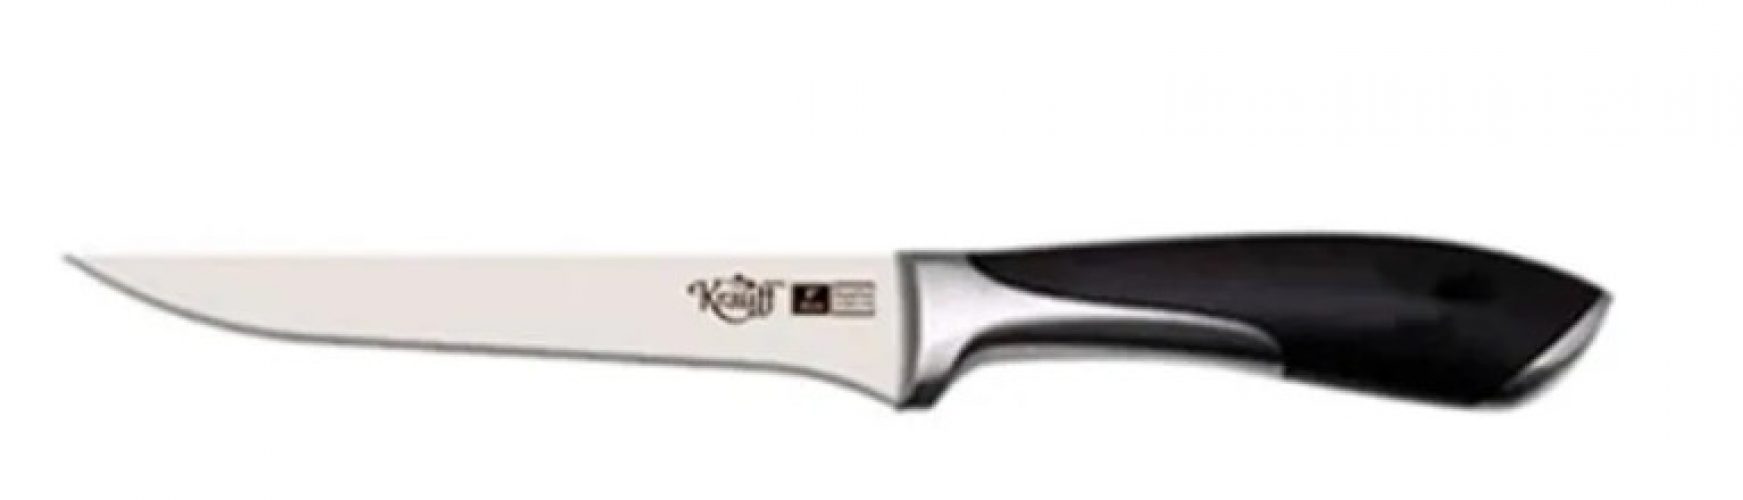 Нож обвалочный Luxus 27см Krauff 29-305-005